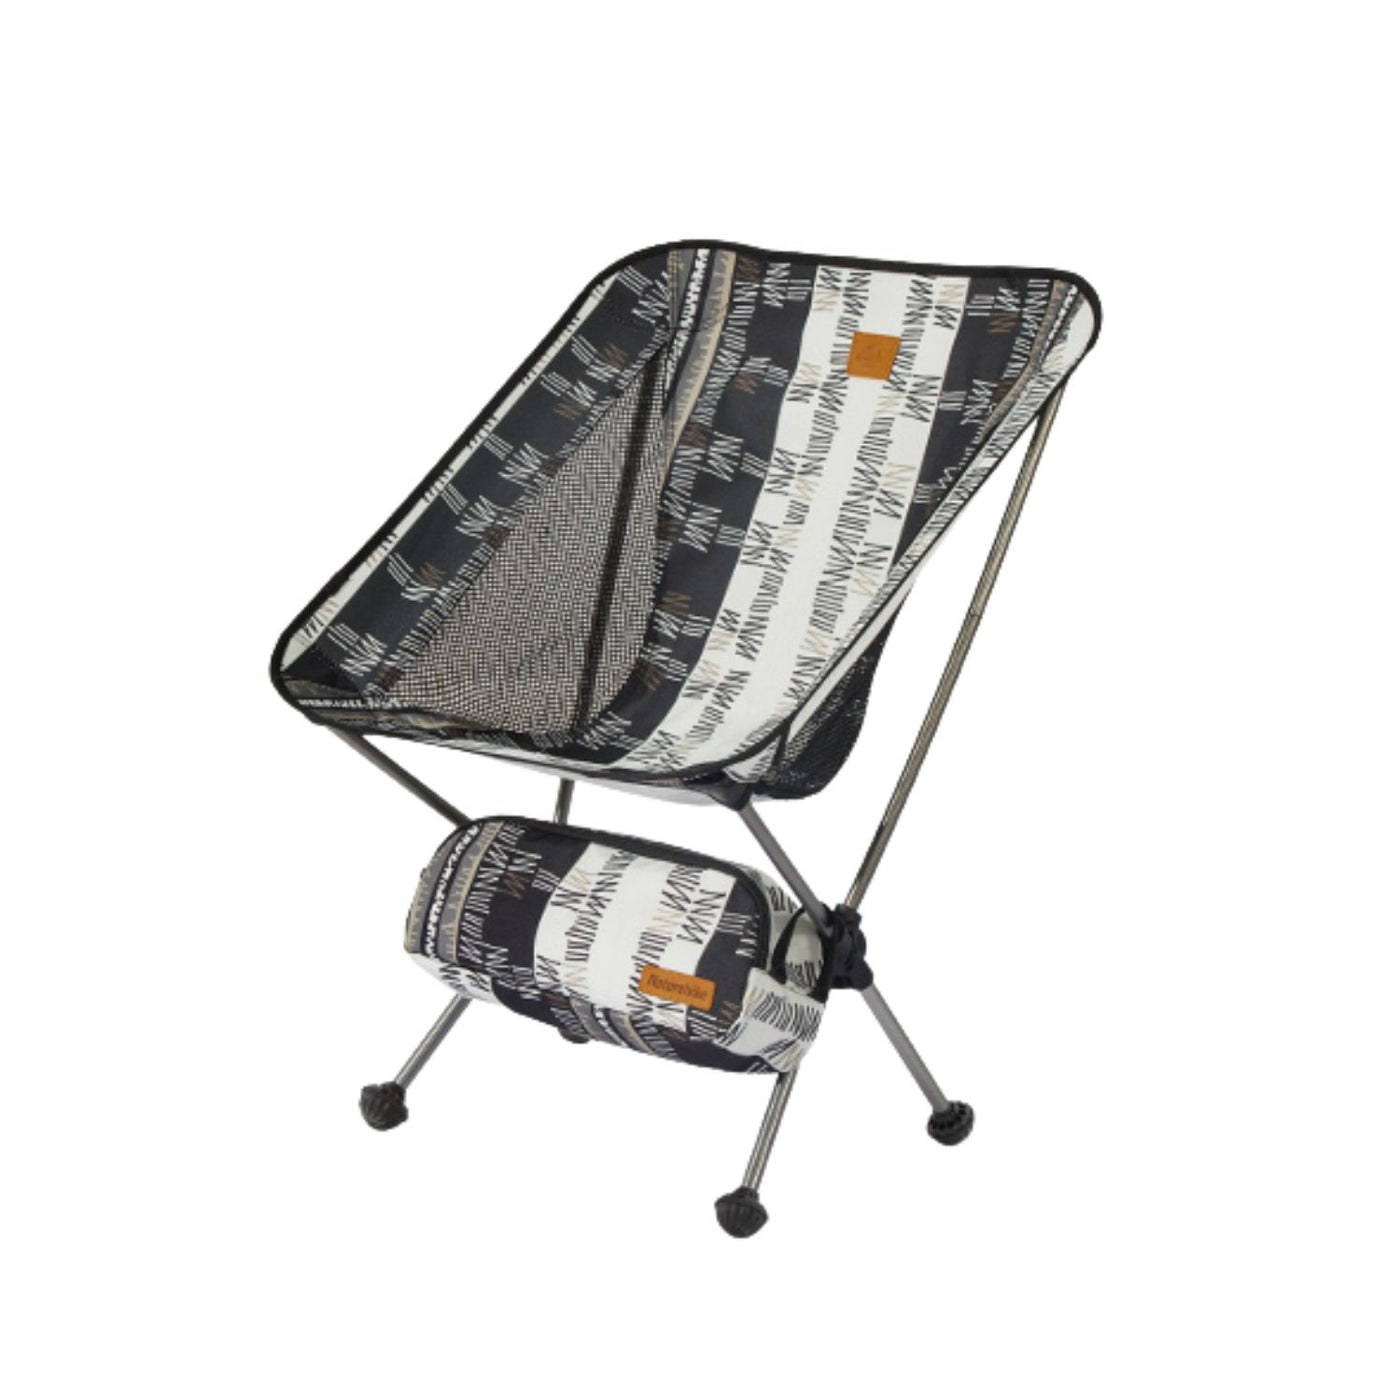 Lunar camping chair oxford fabric